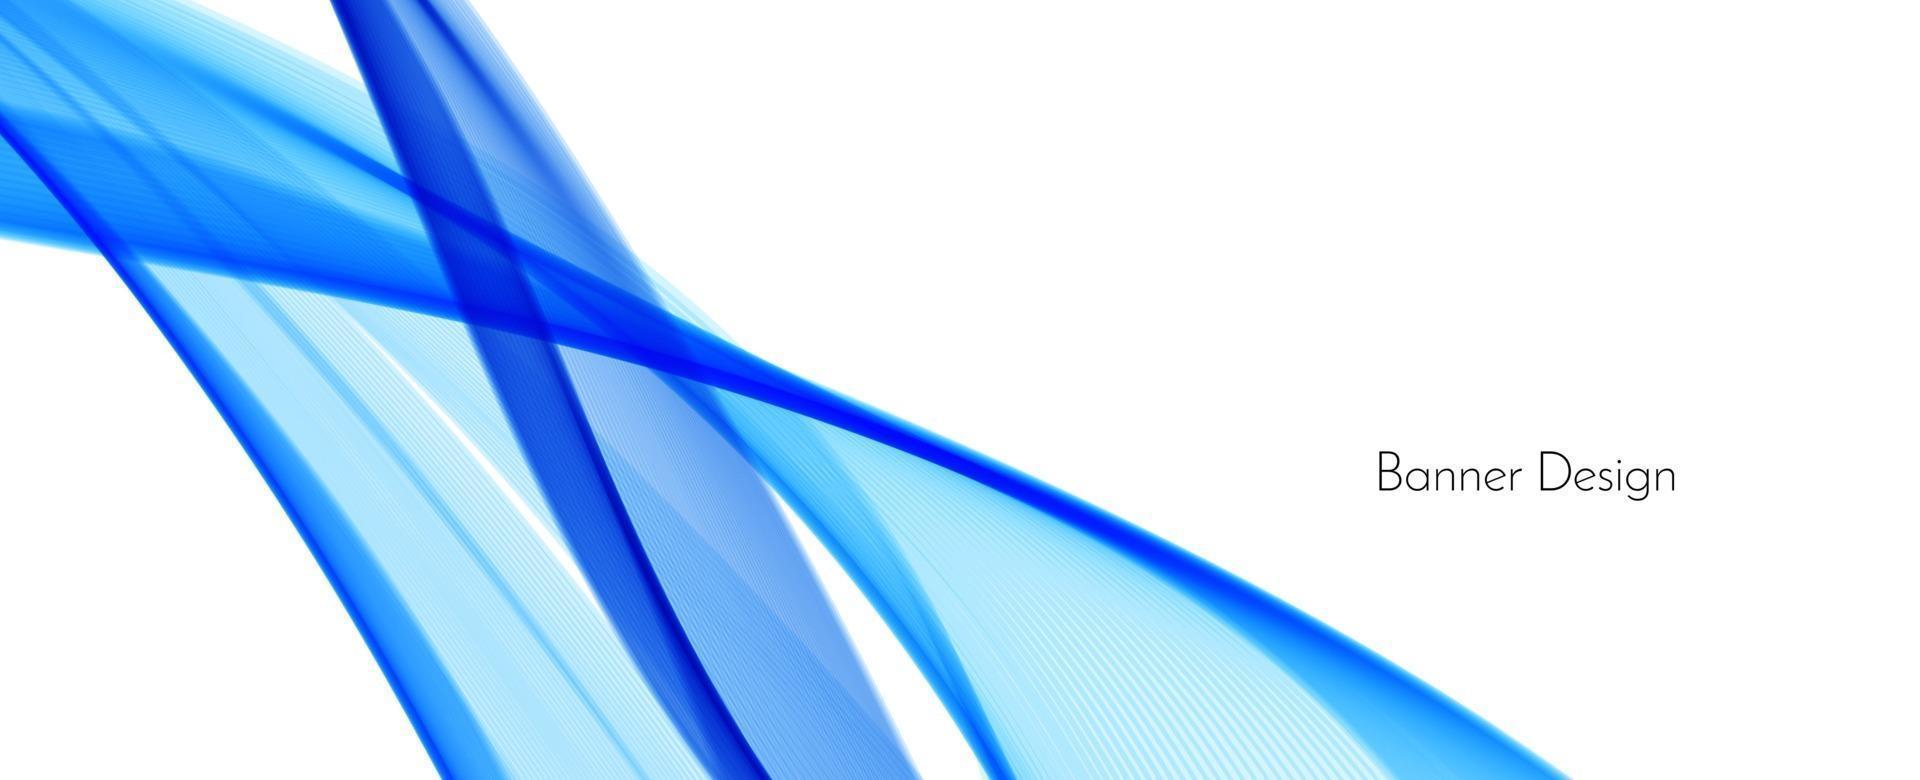 Abstract blue modern wave design banner background vector